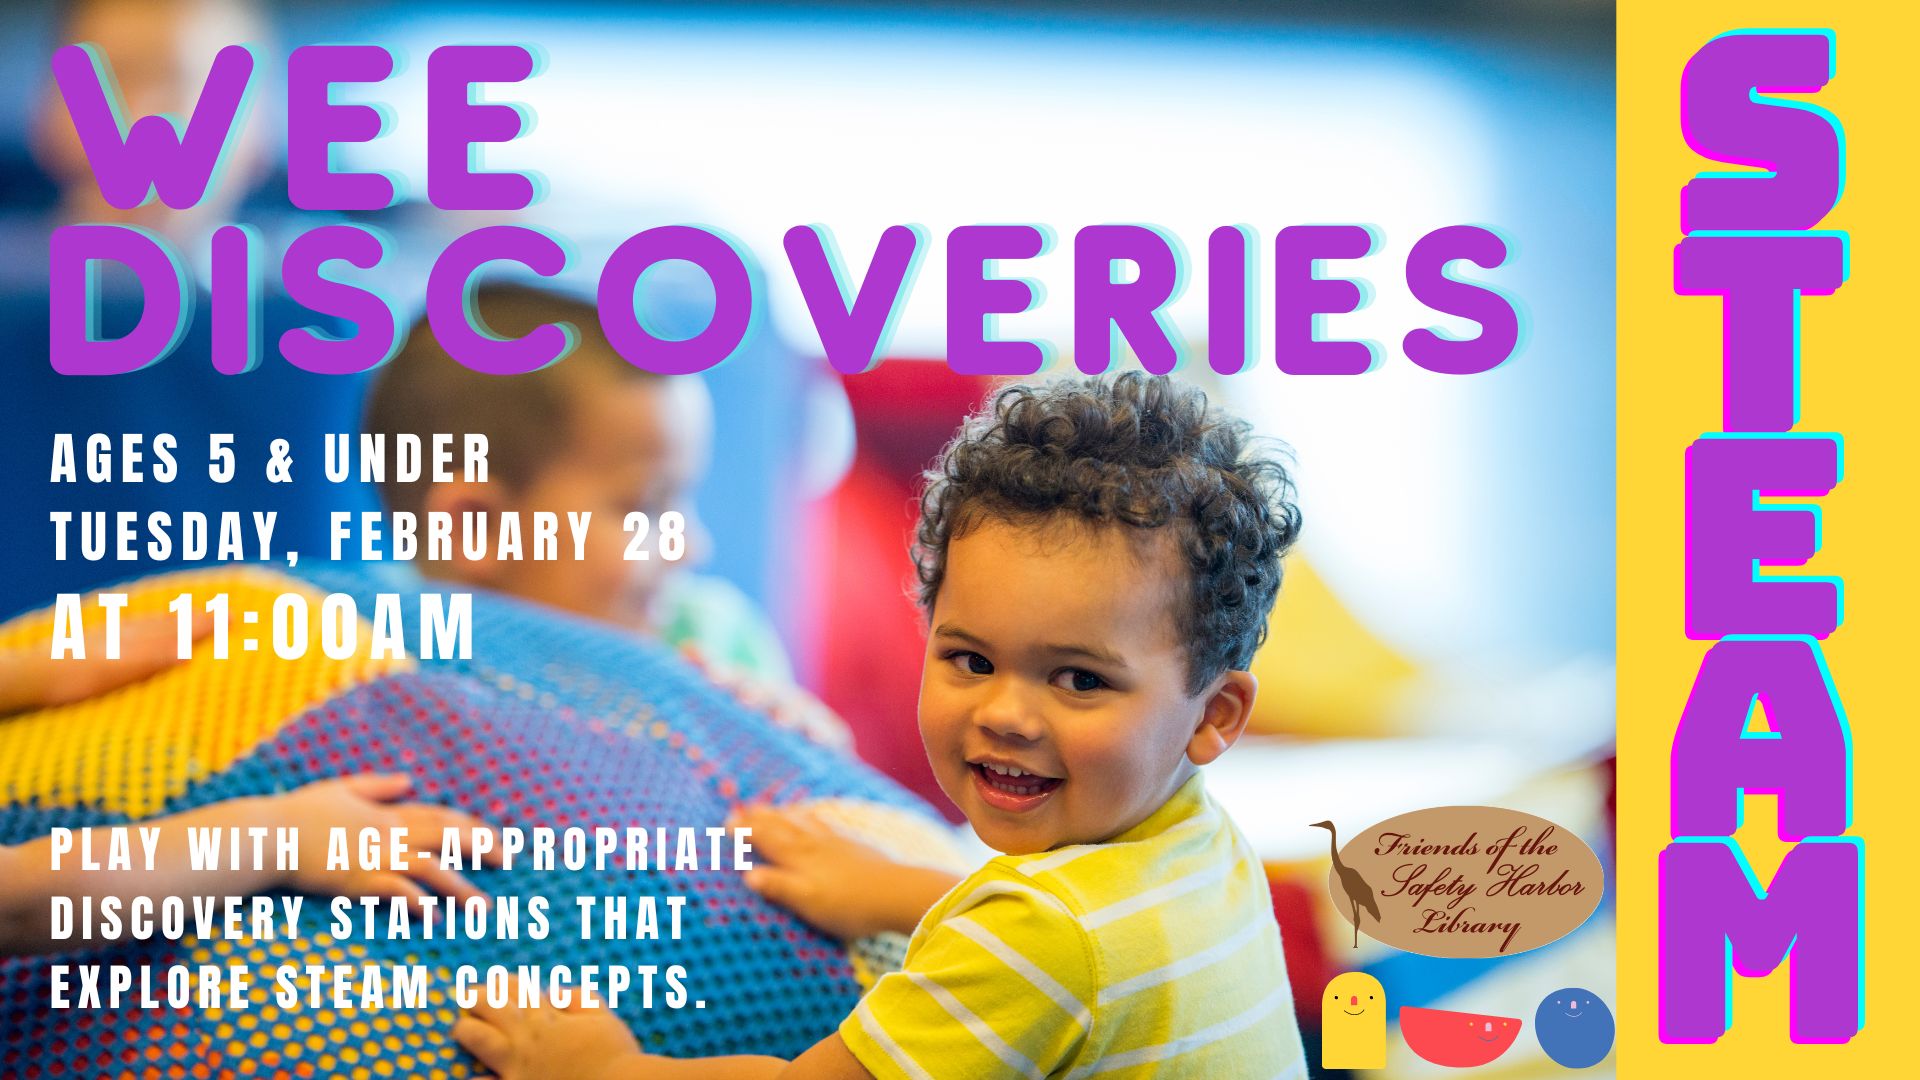 Wee Discoveries STEAM program for Preschoolers 